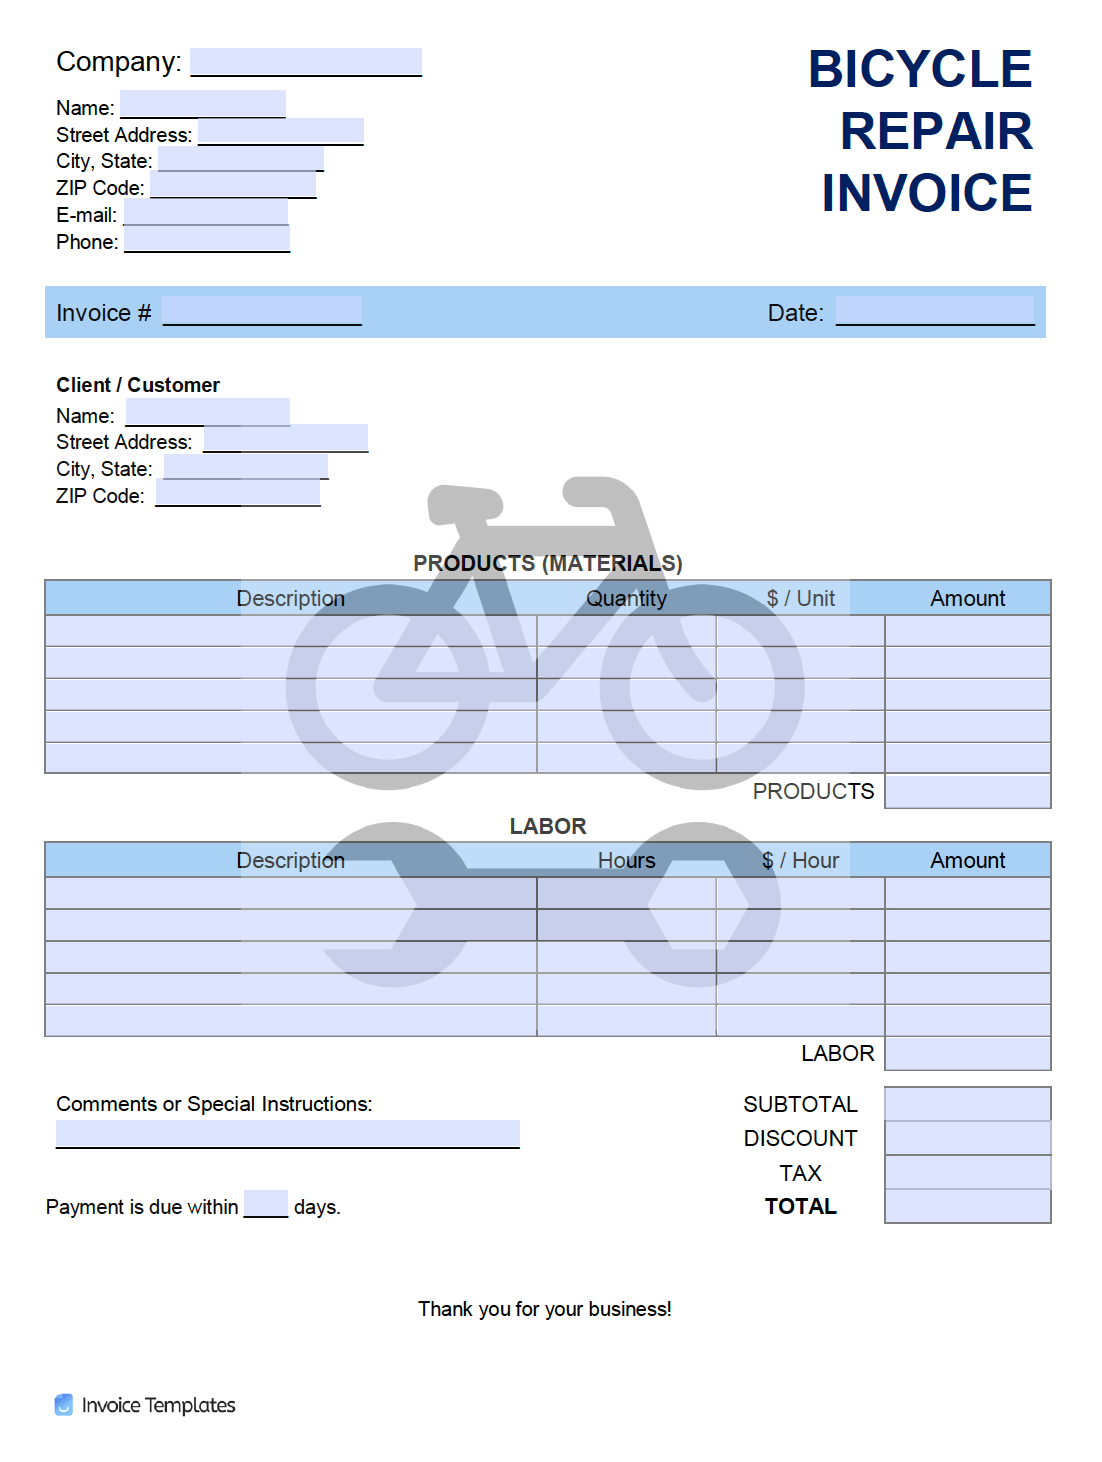 Free Bicycle (Bike) Repair Invoice Template  PDF  WORD  EXCEL Pertaining To Mechanics Job Card Template